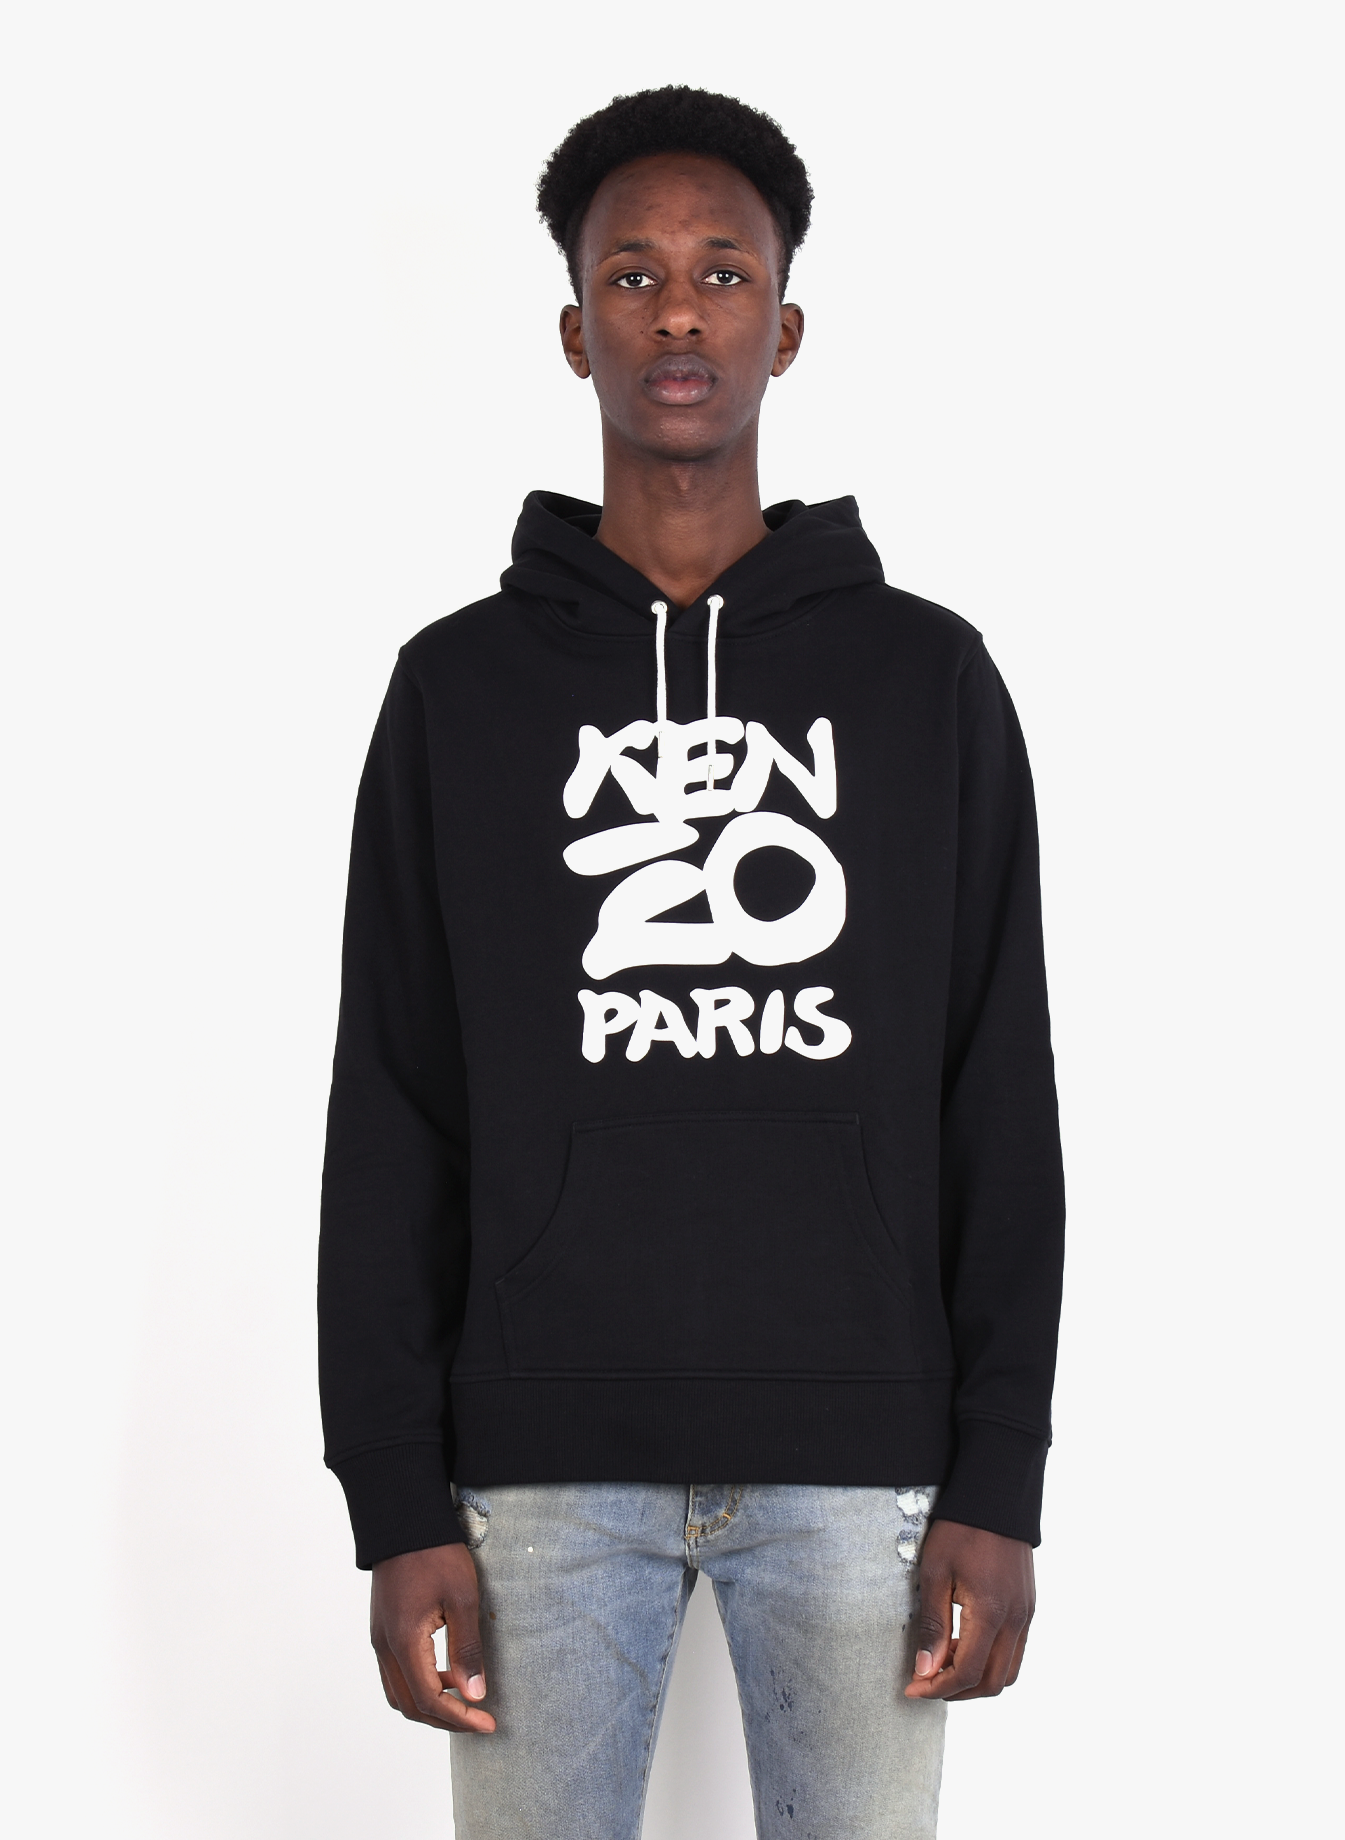 kenzo logo hoodie